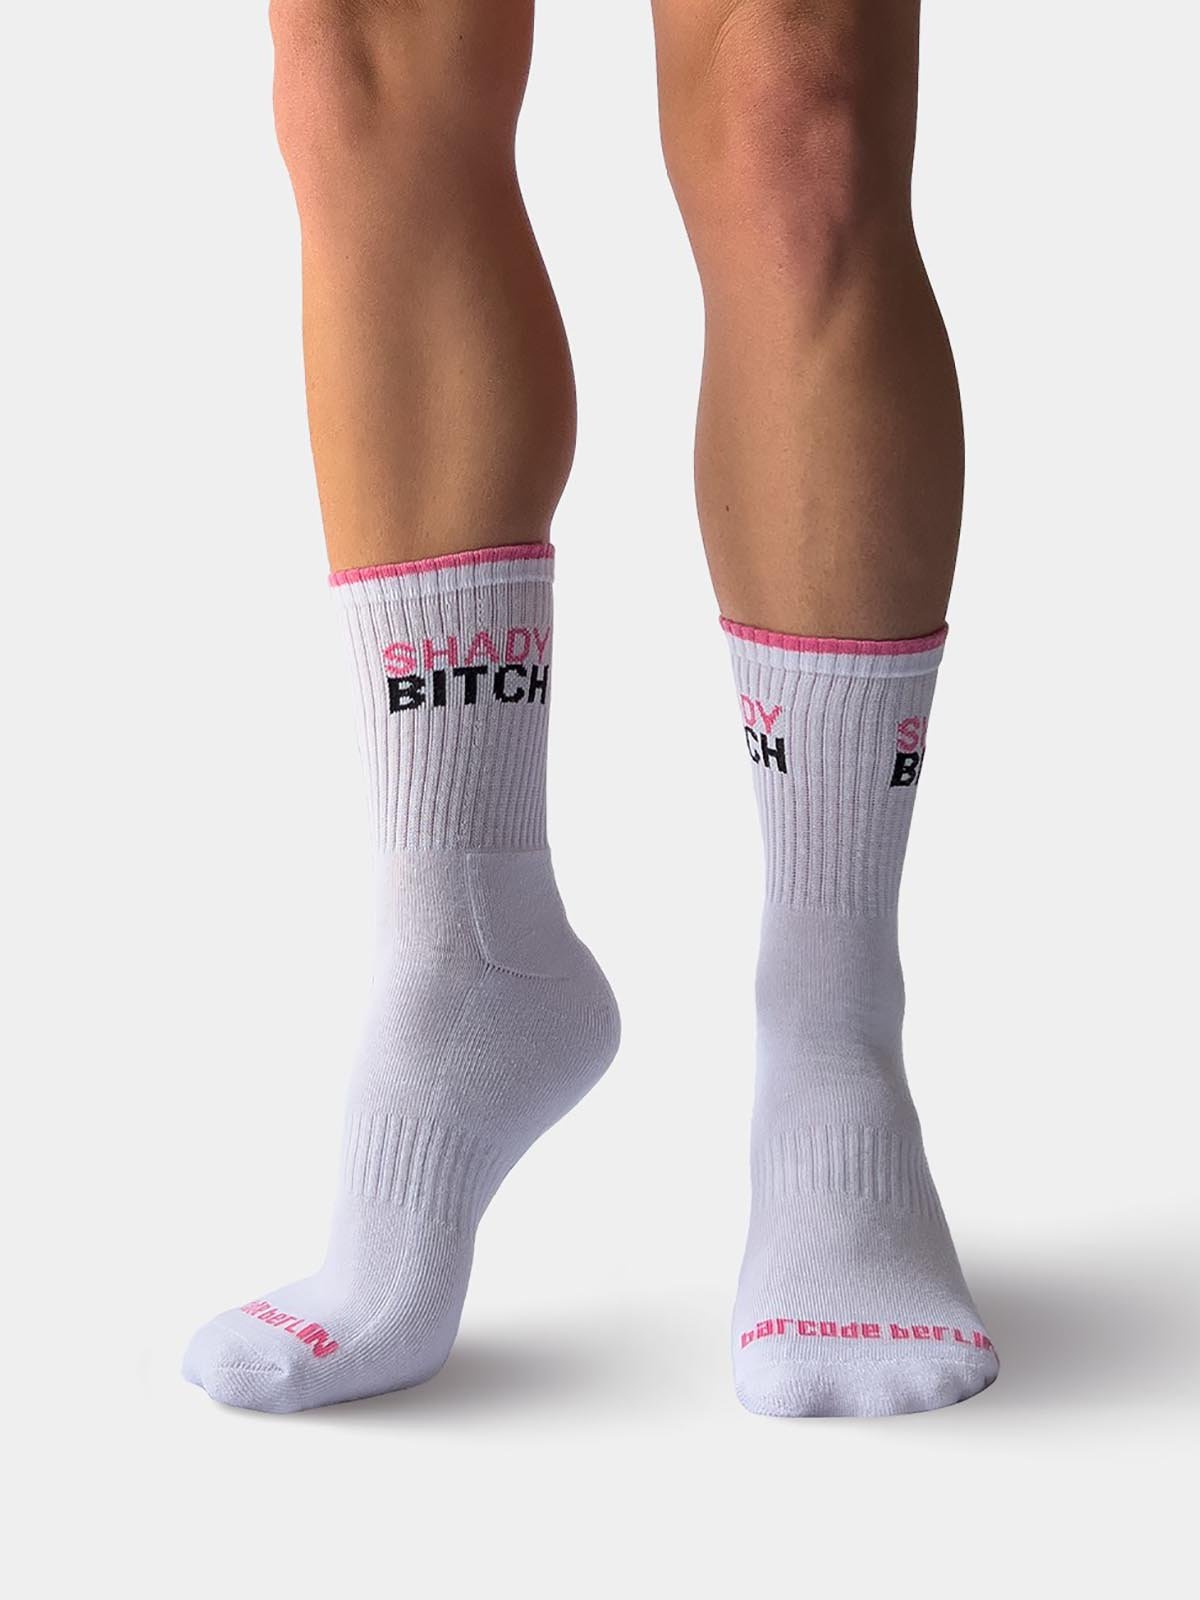 Fun Socks "Shady Bitch" | White/Pink/Black